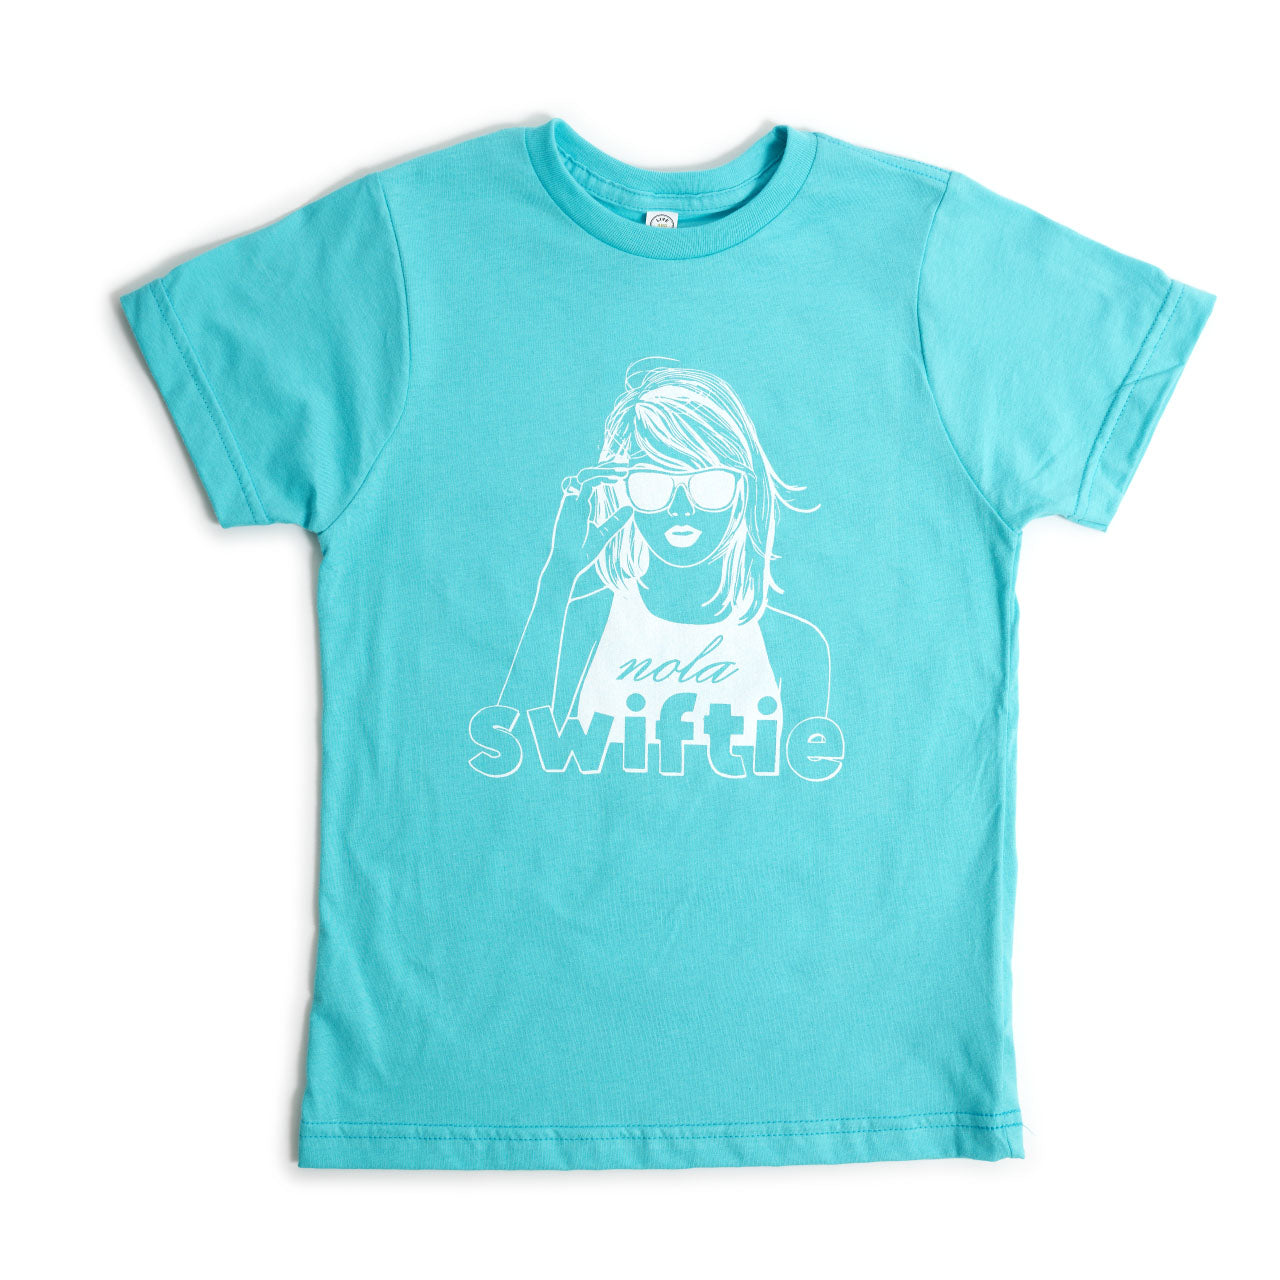 Buy turquoise NOLA Swiftie T-shirts